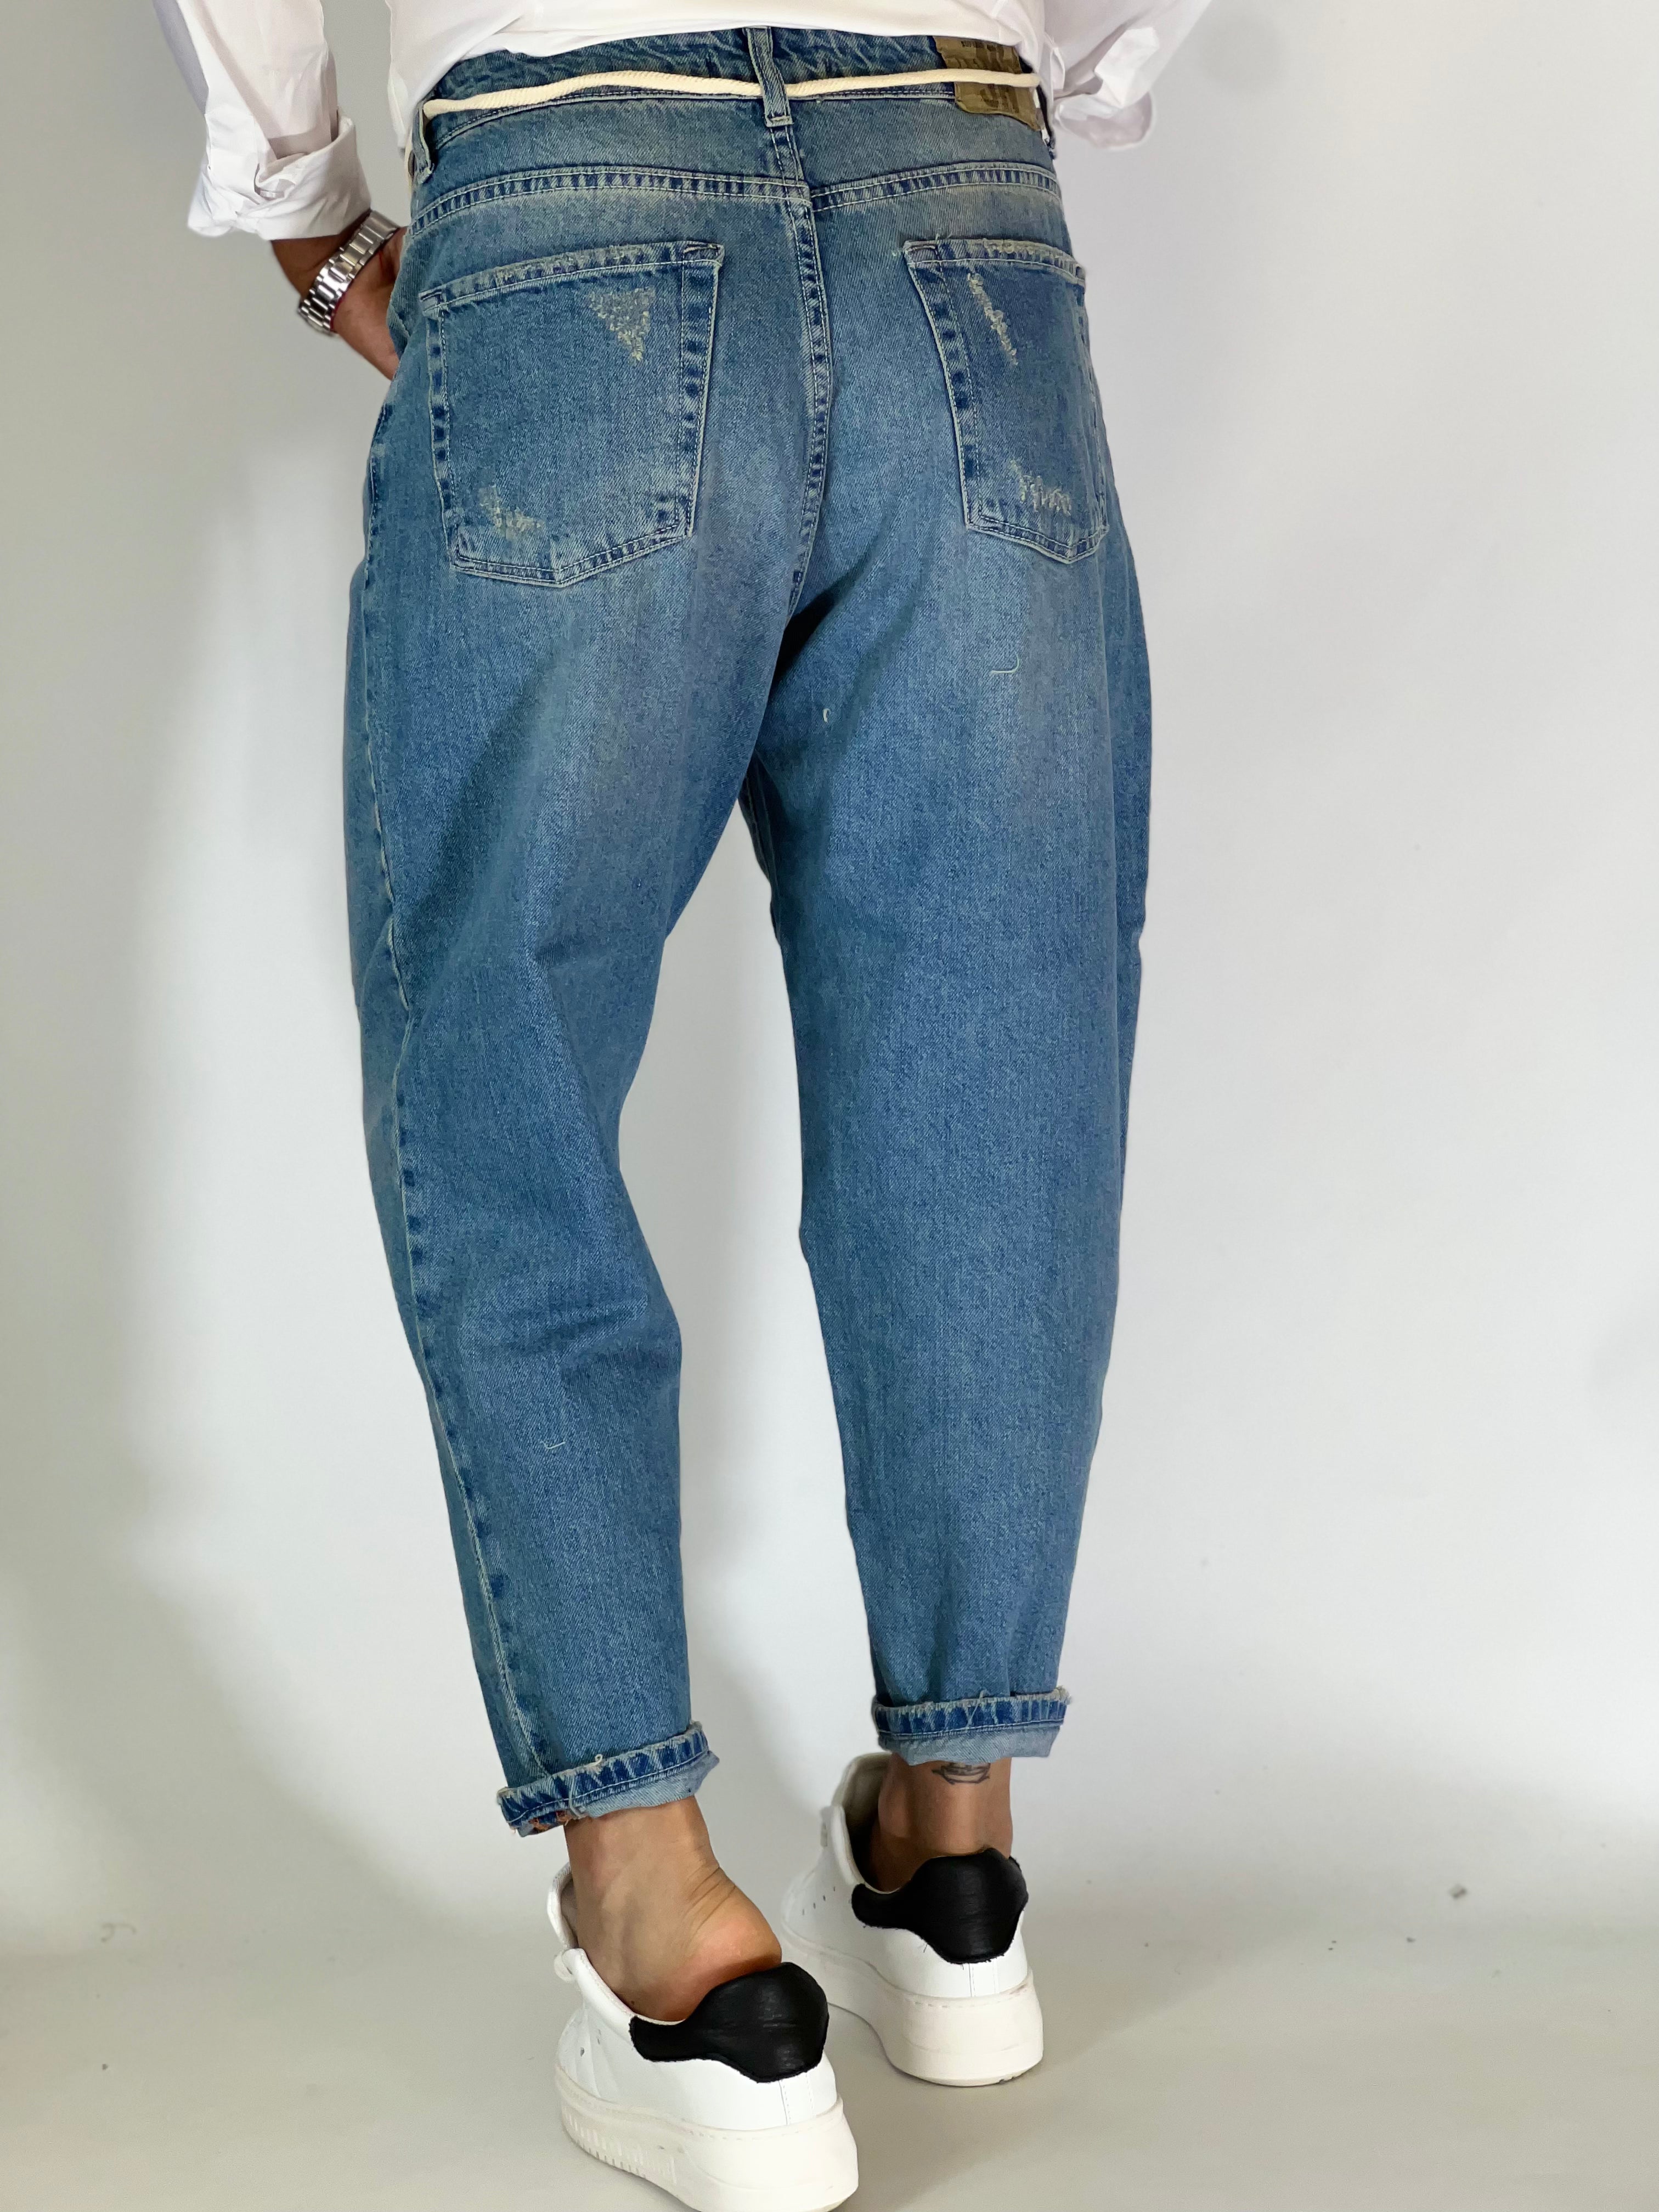 Jeans loose fit sabbiato ALGERIA42